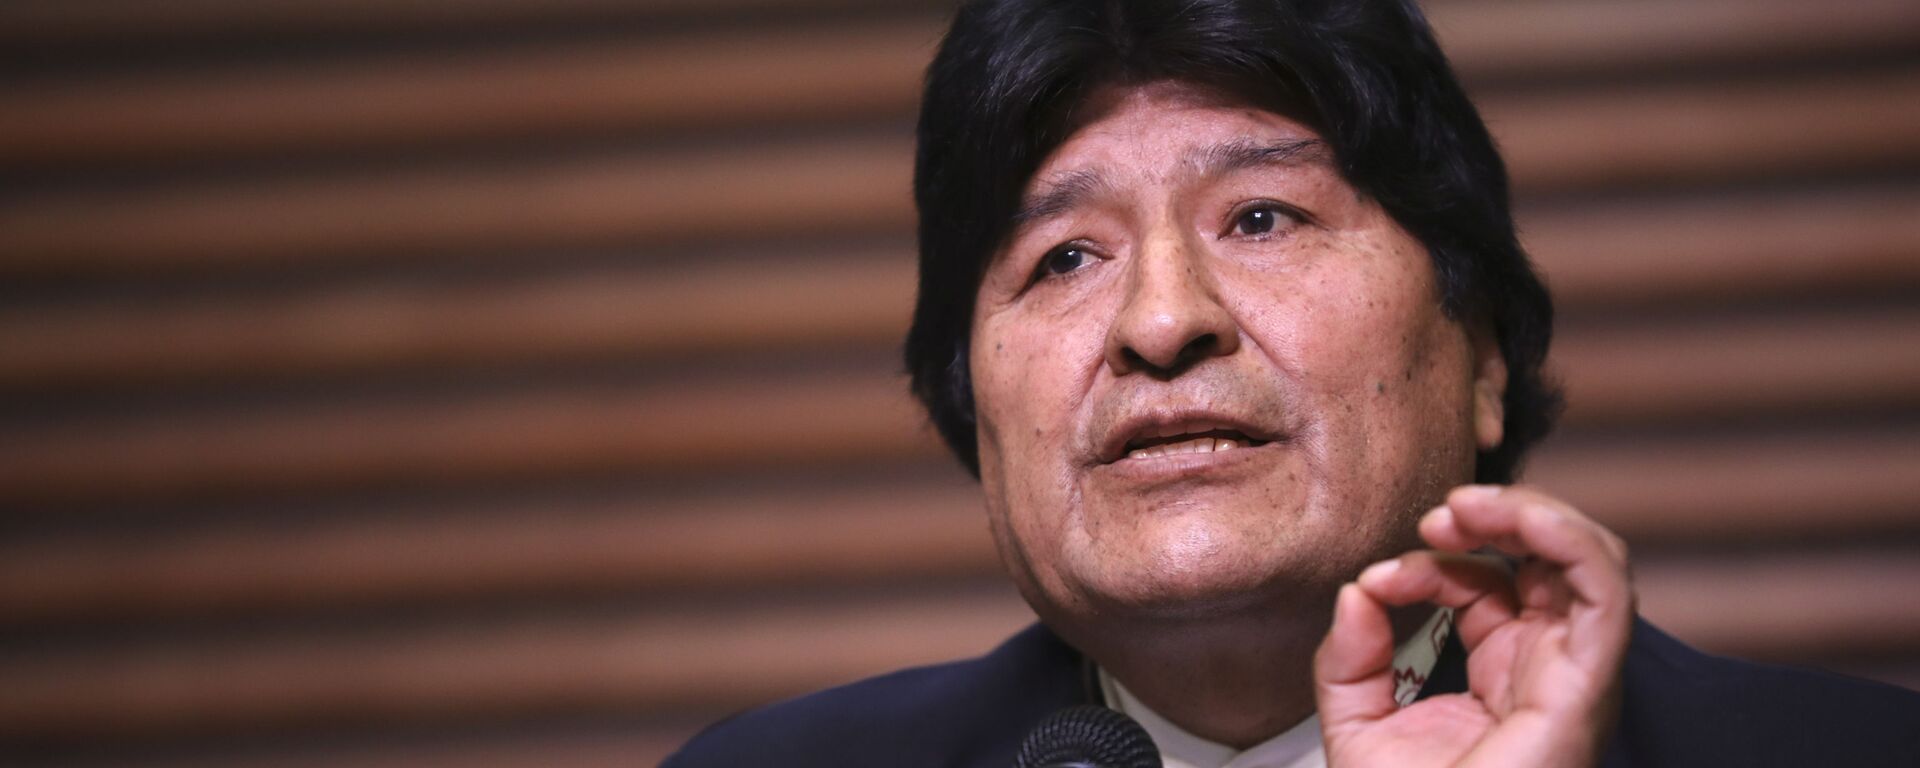 Evo Morales, expresidente boliviano - Sputnik Mundo, 1920, 13.07.2021